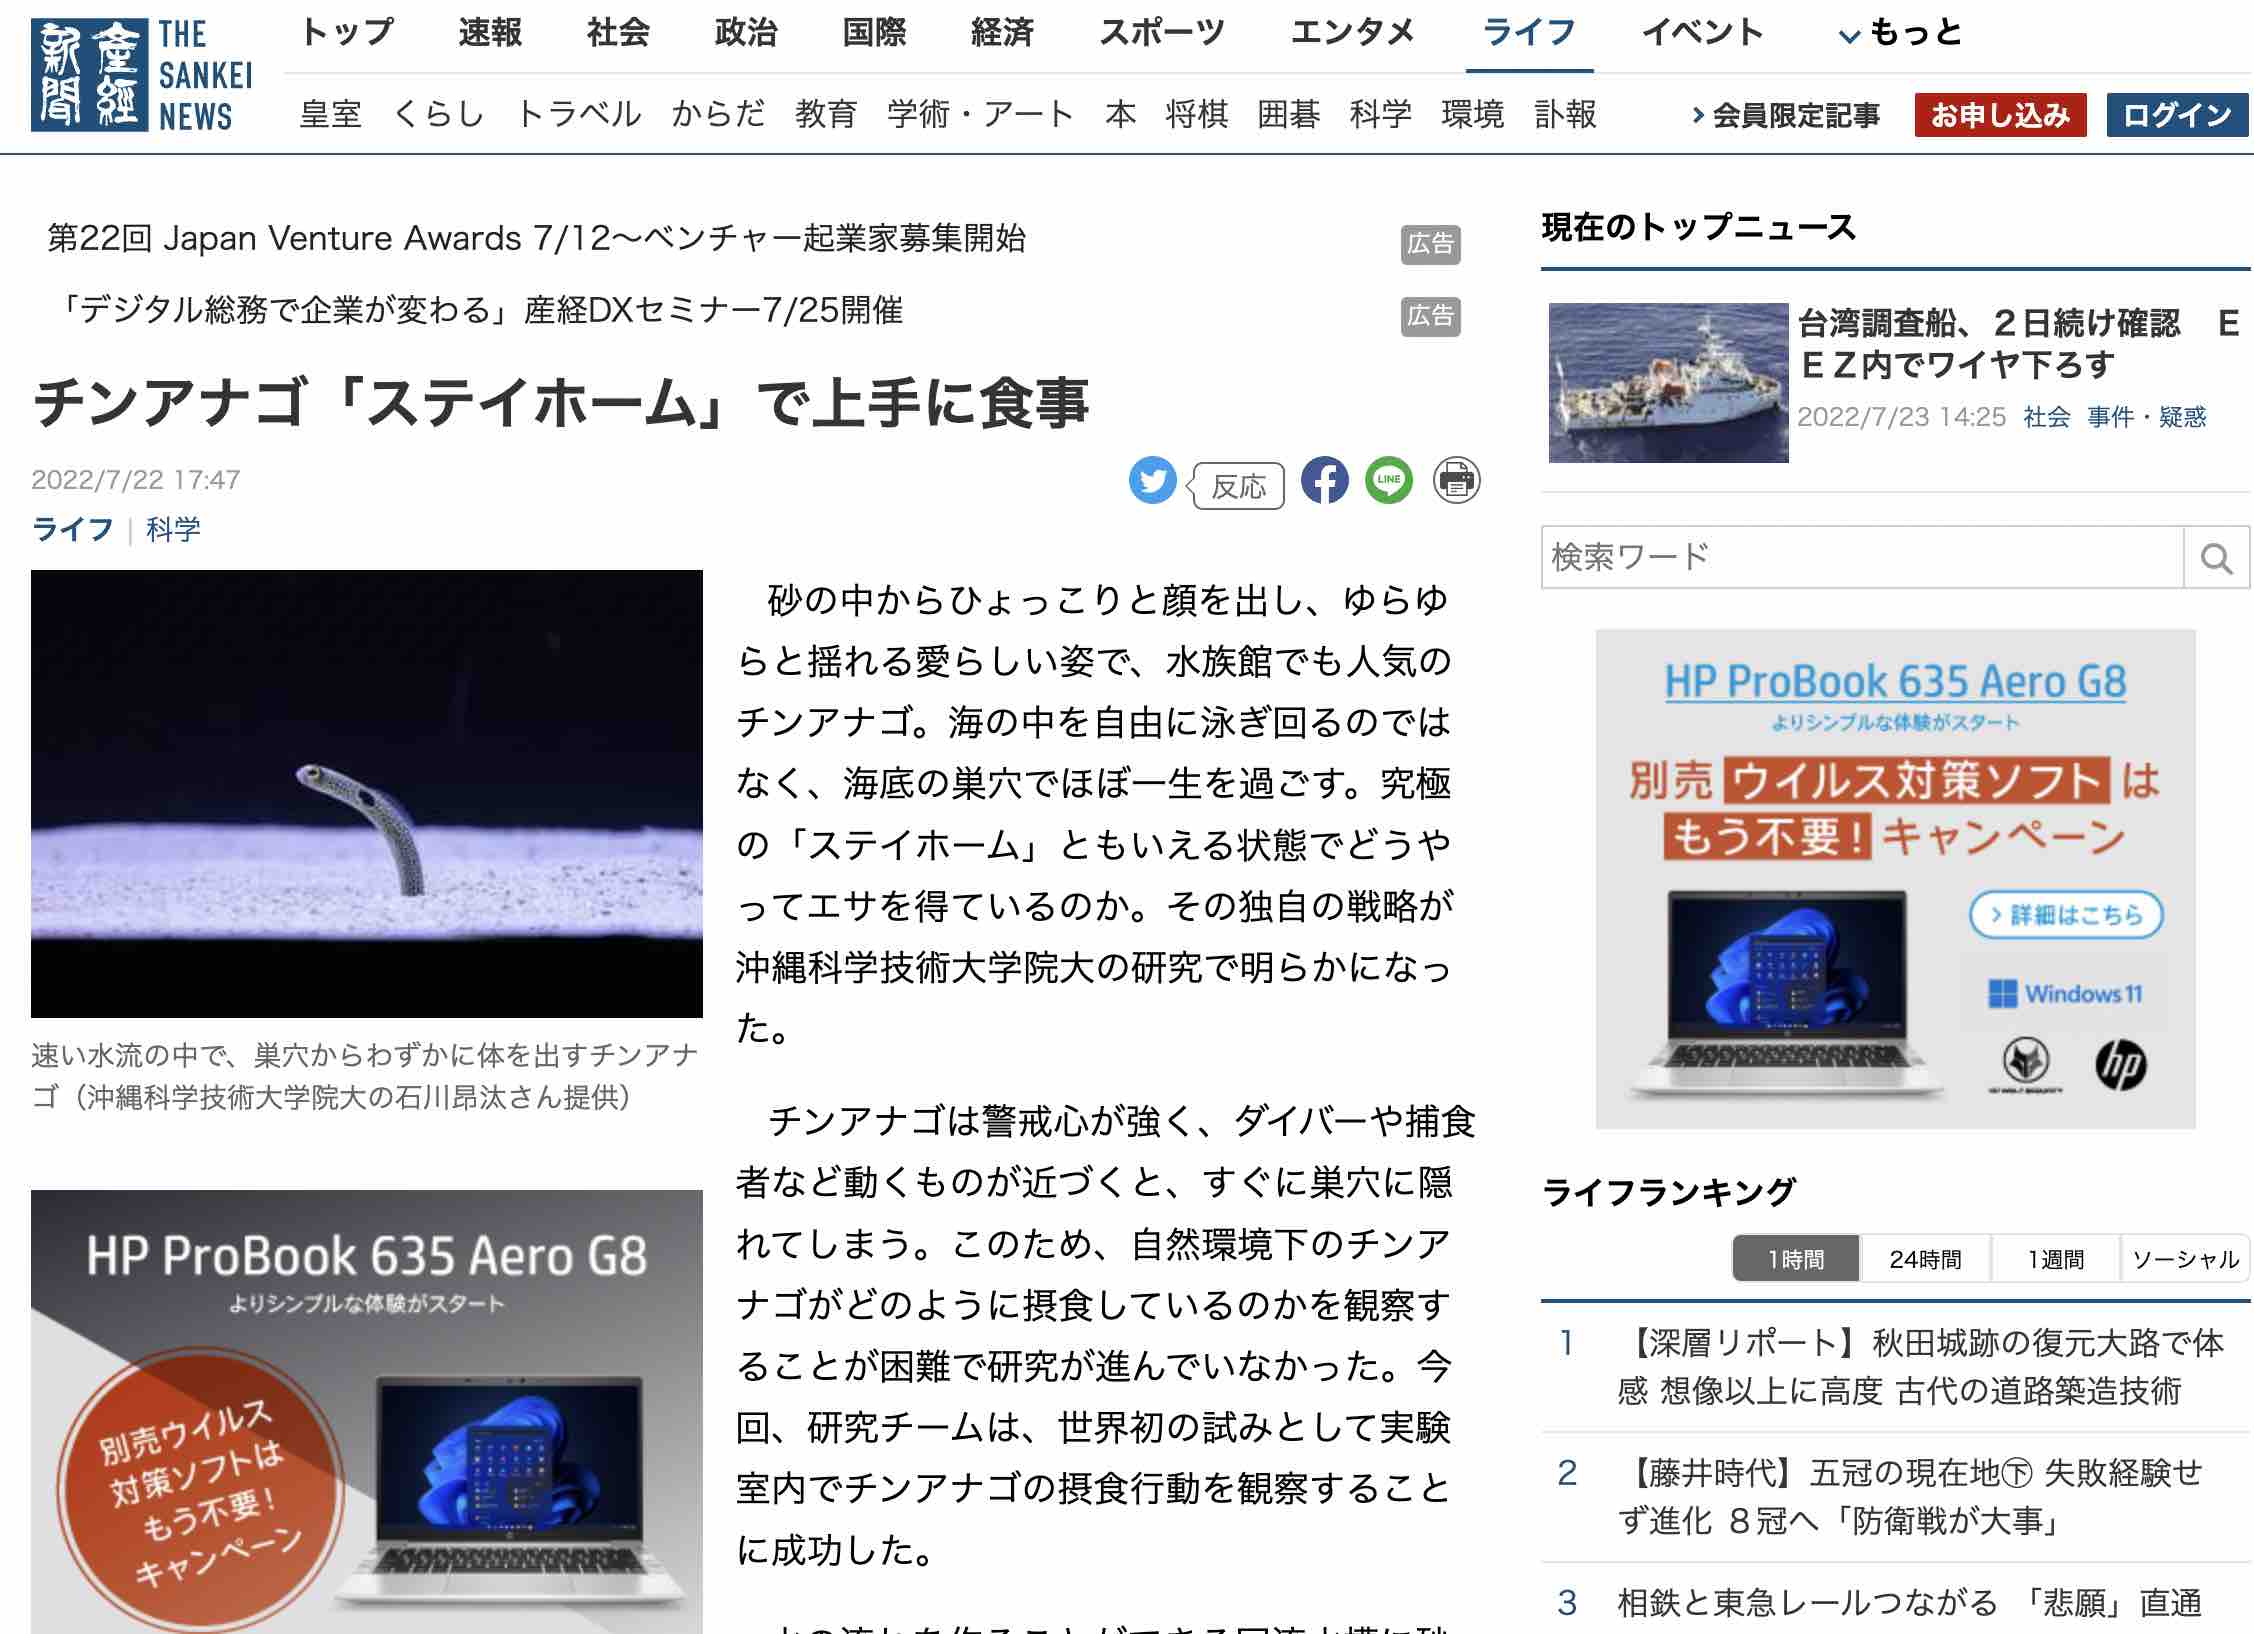 Sankei news